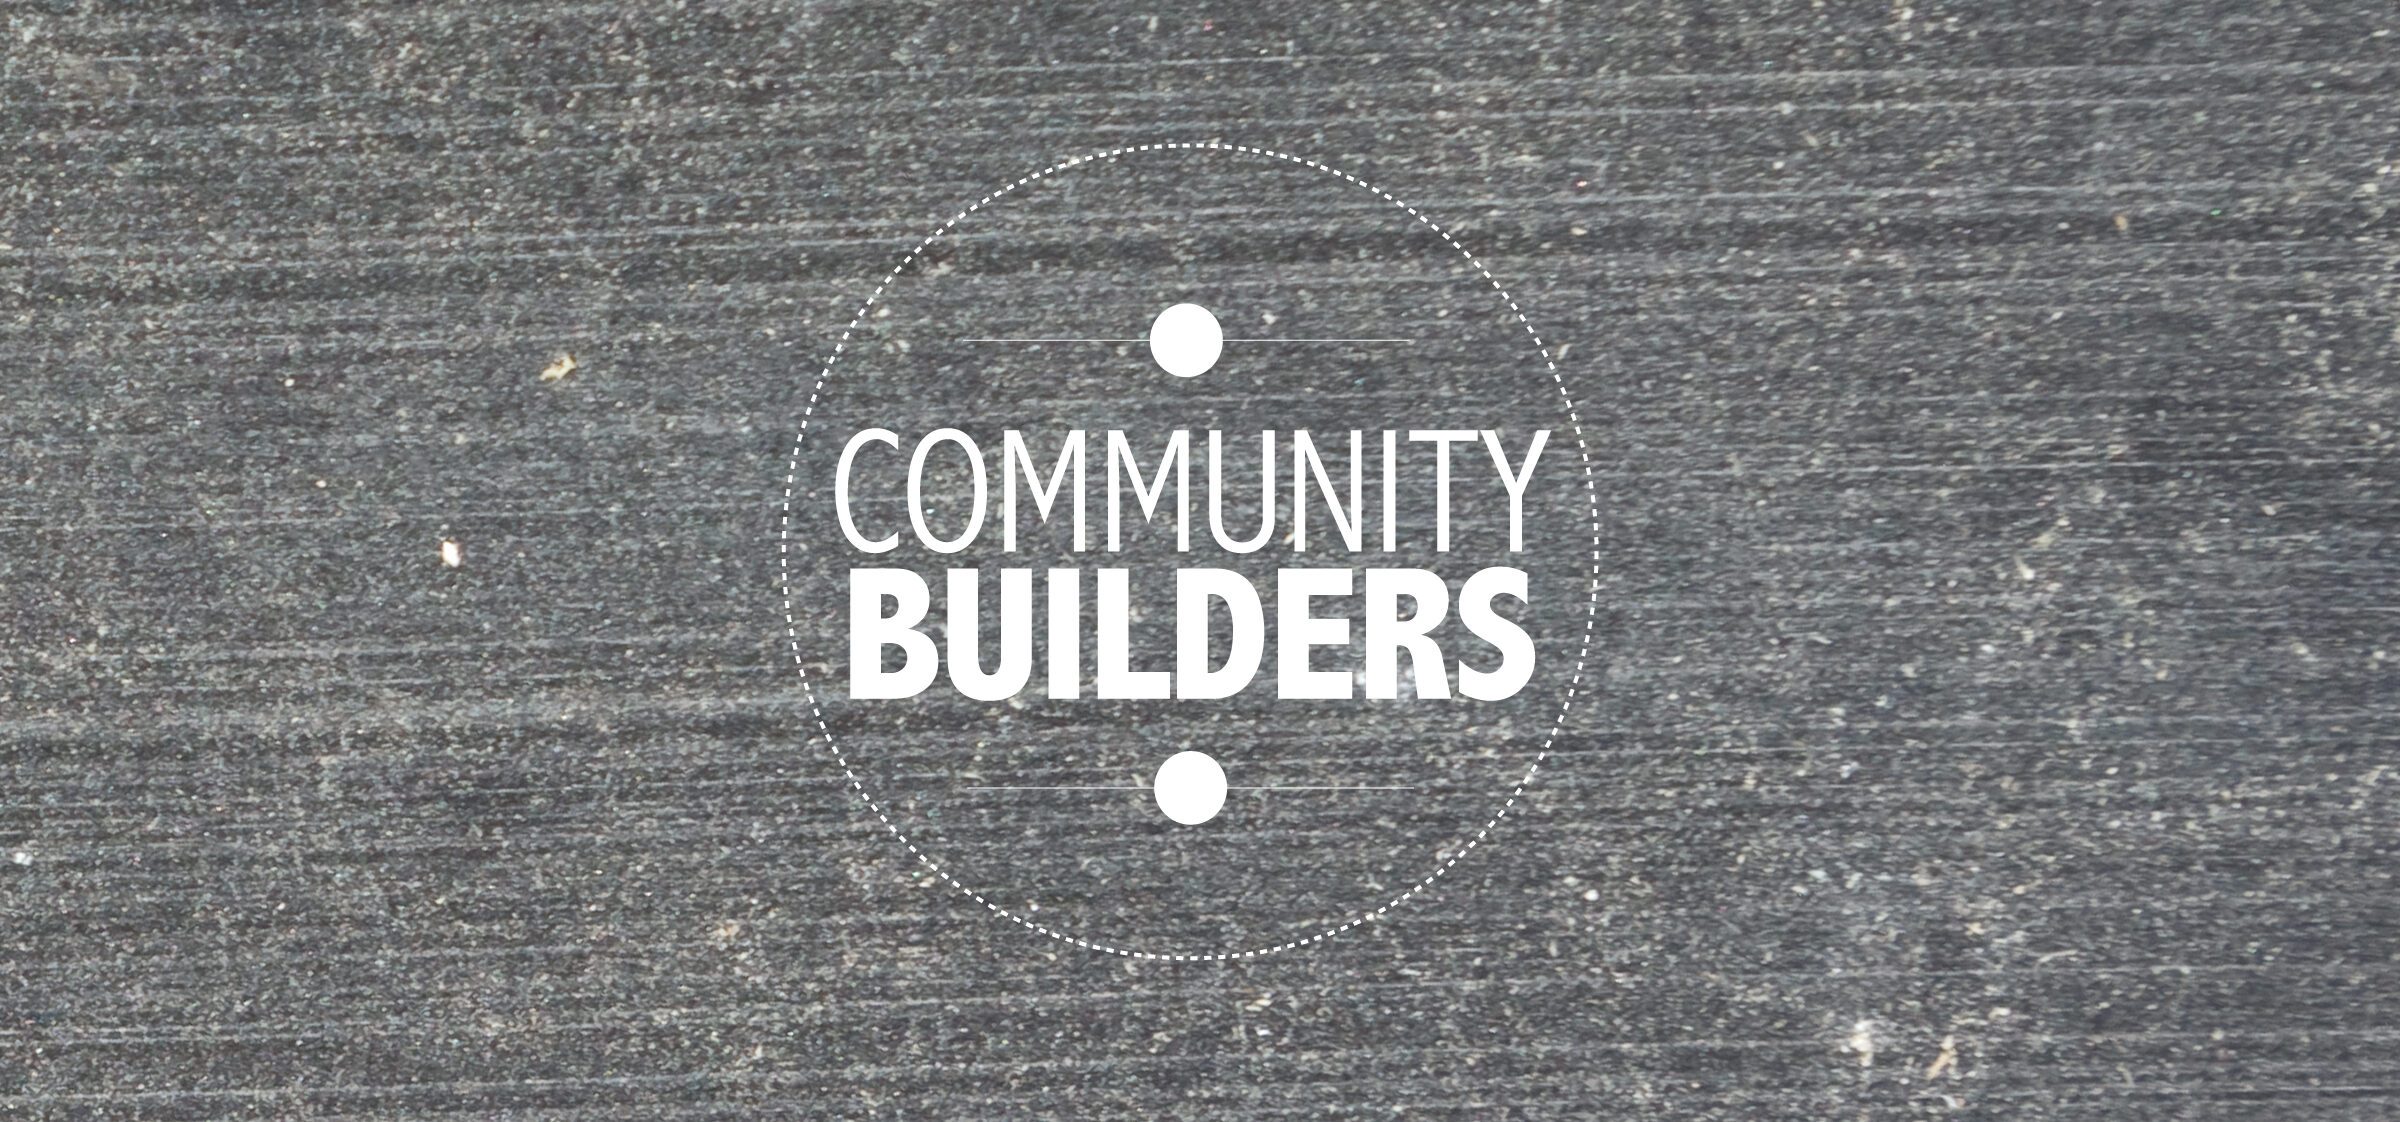 Community Builders logo set against a wood background 